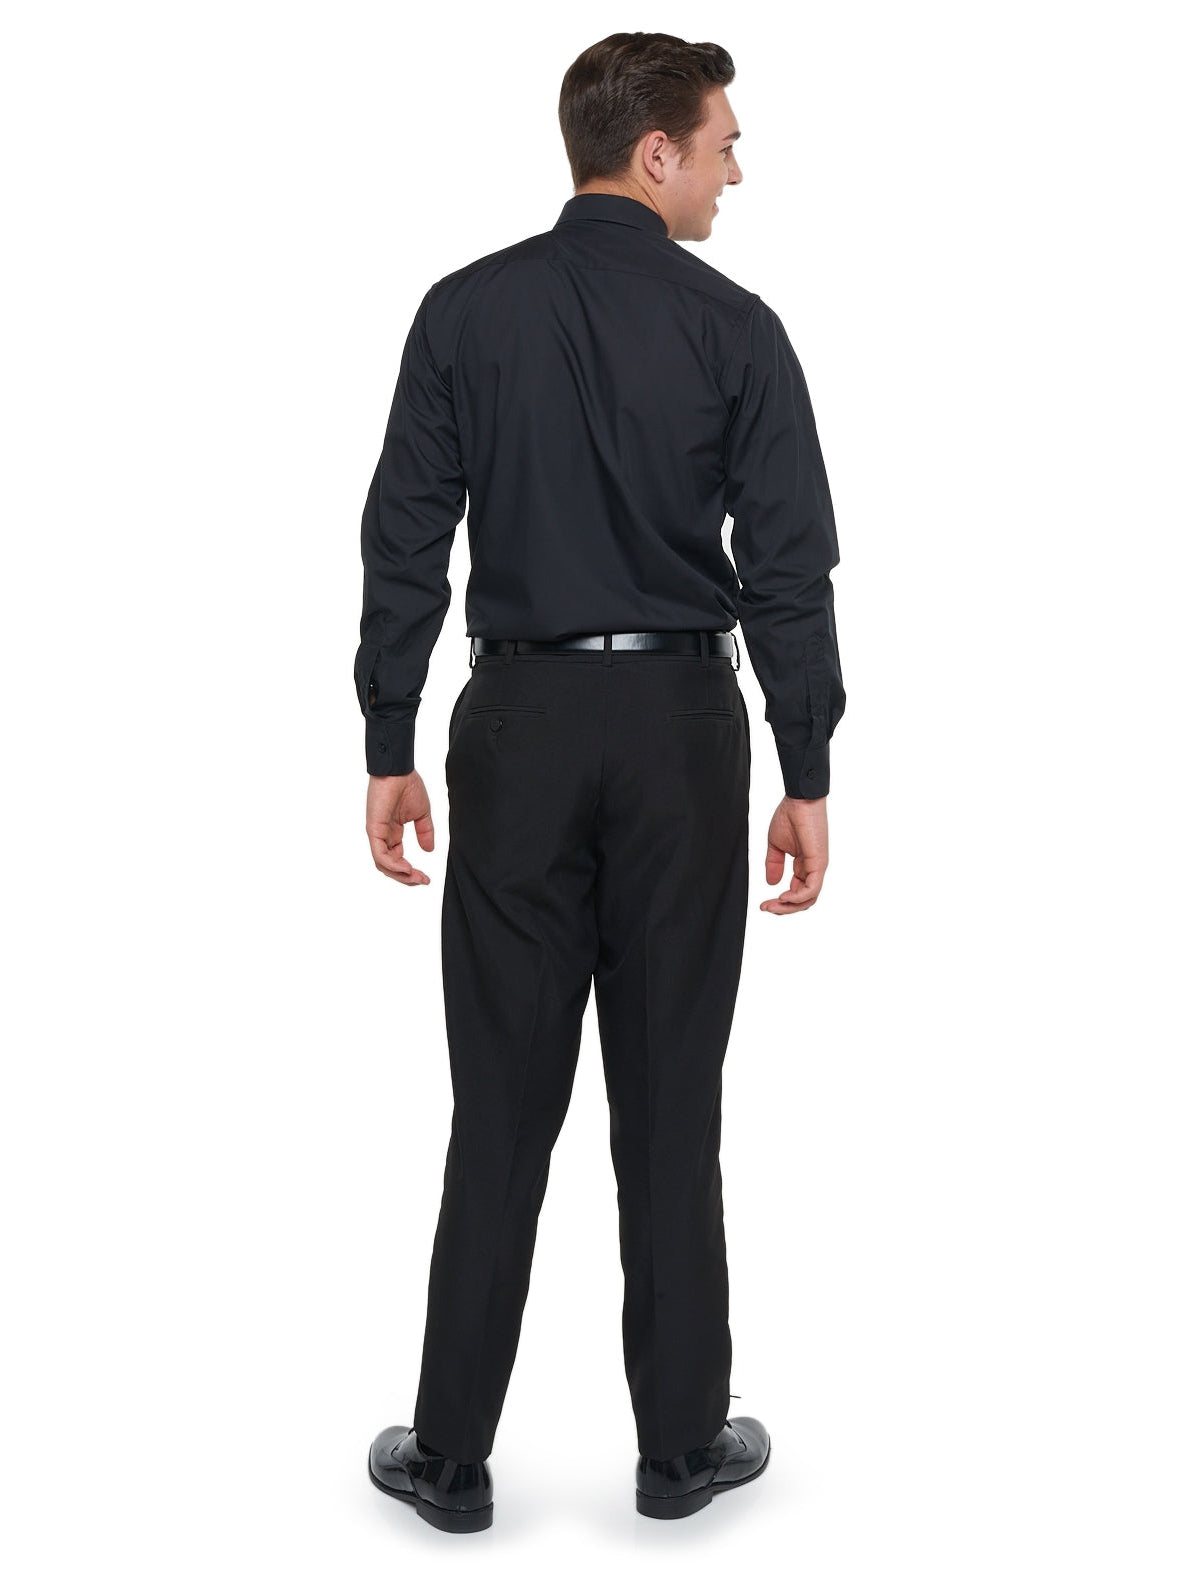 LOGAN (Style #6707) - Black Shirt Package